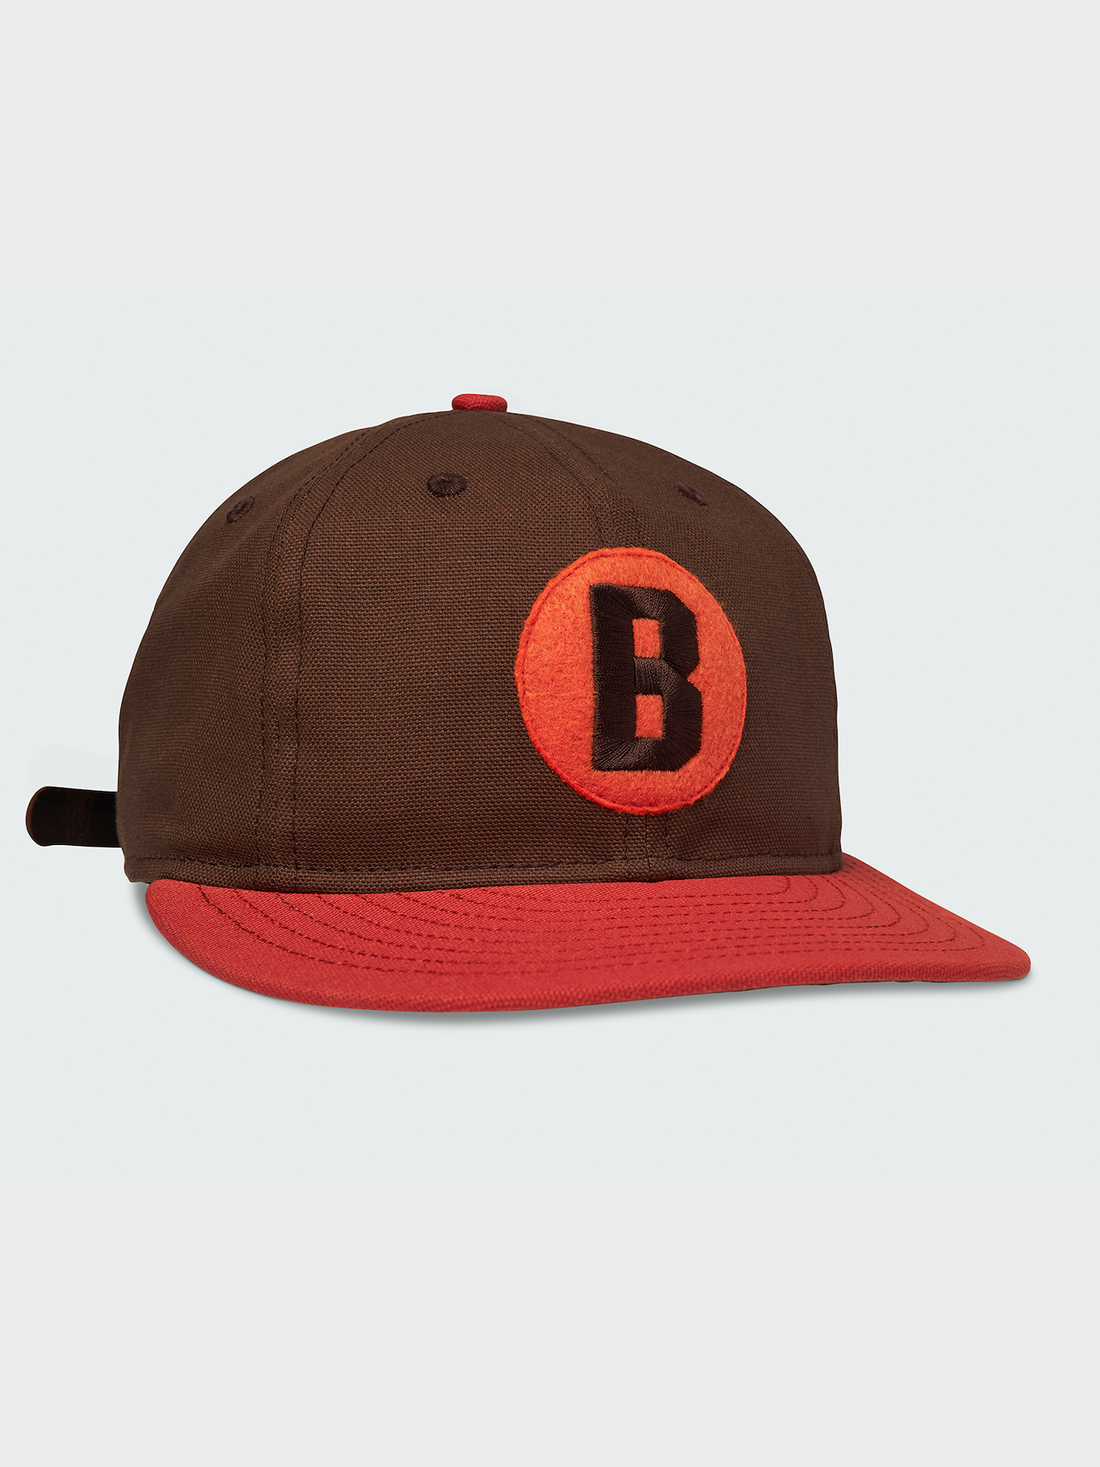 NLBM - Baltimore Black Sox - Snapback Cap